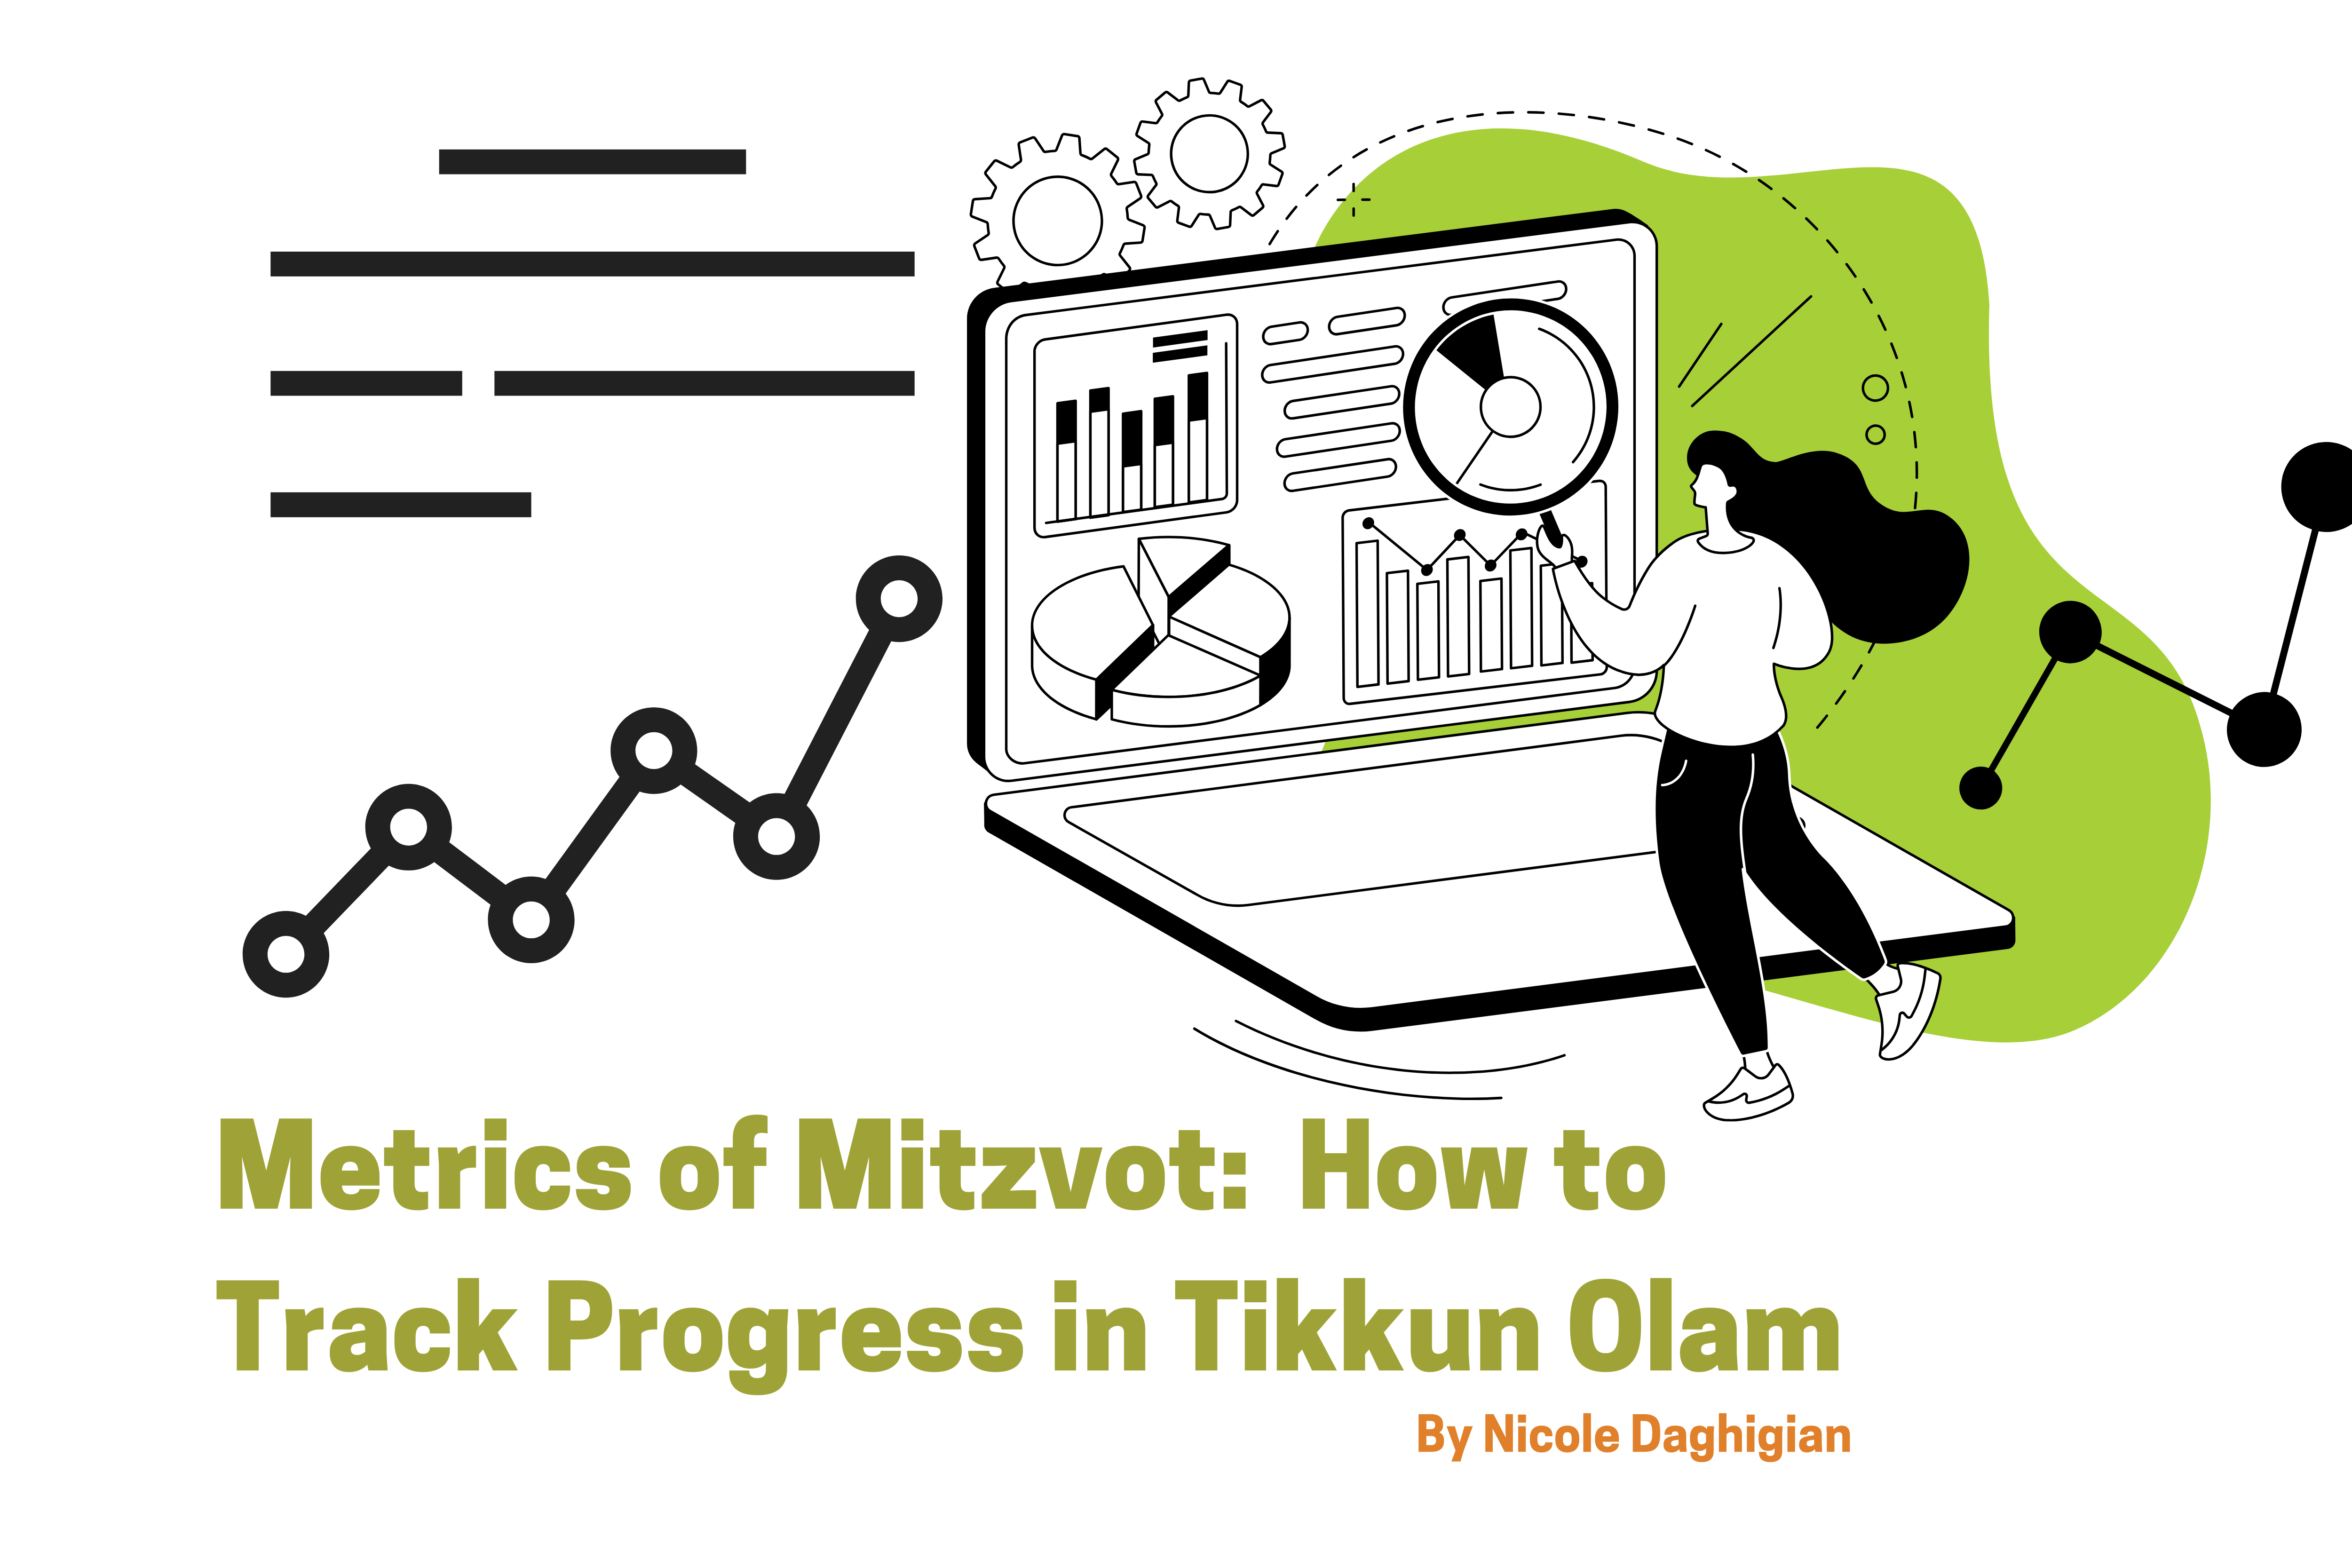 Metrics of Mitzvot: How to Track Progress in Tikkun Olam, by Nicole Daghigian